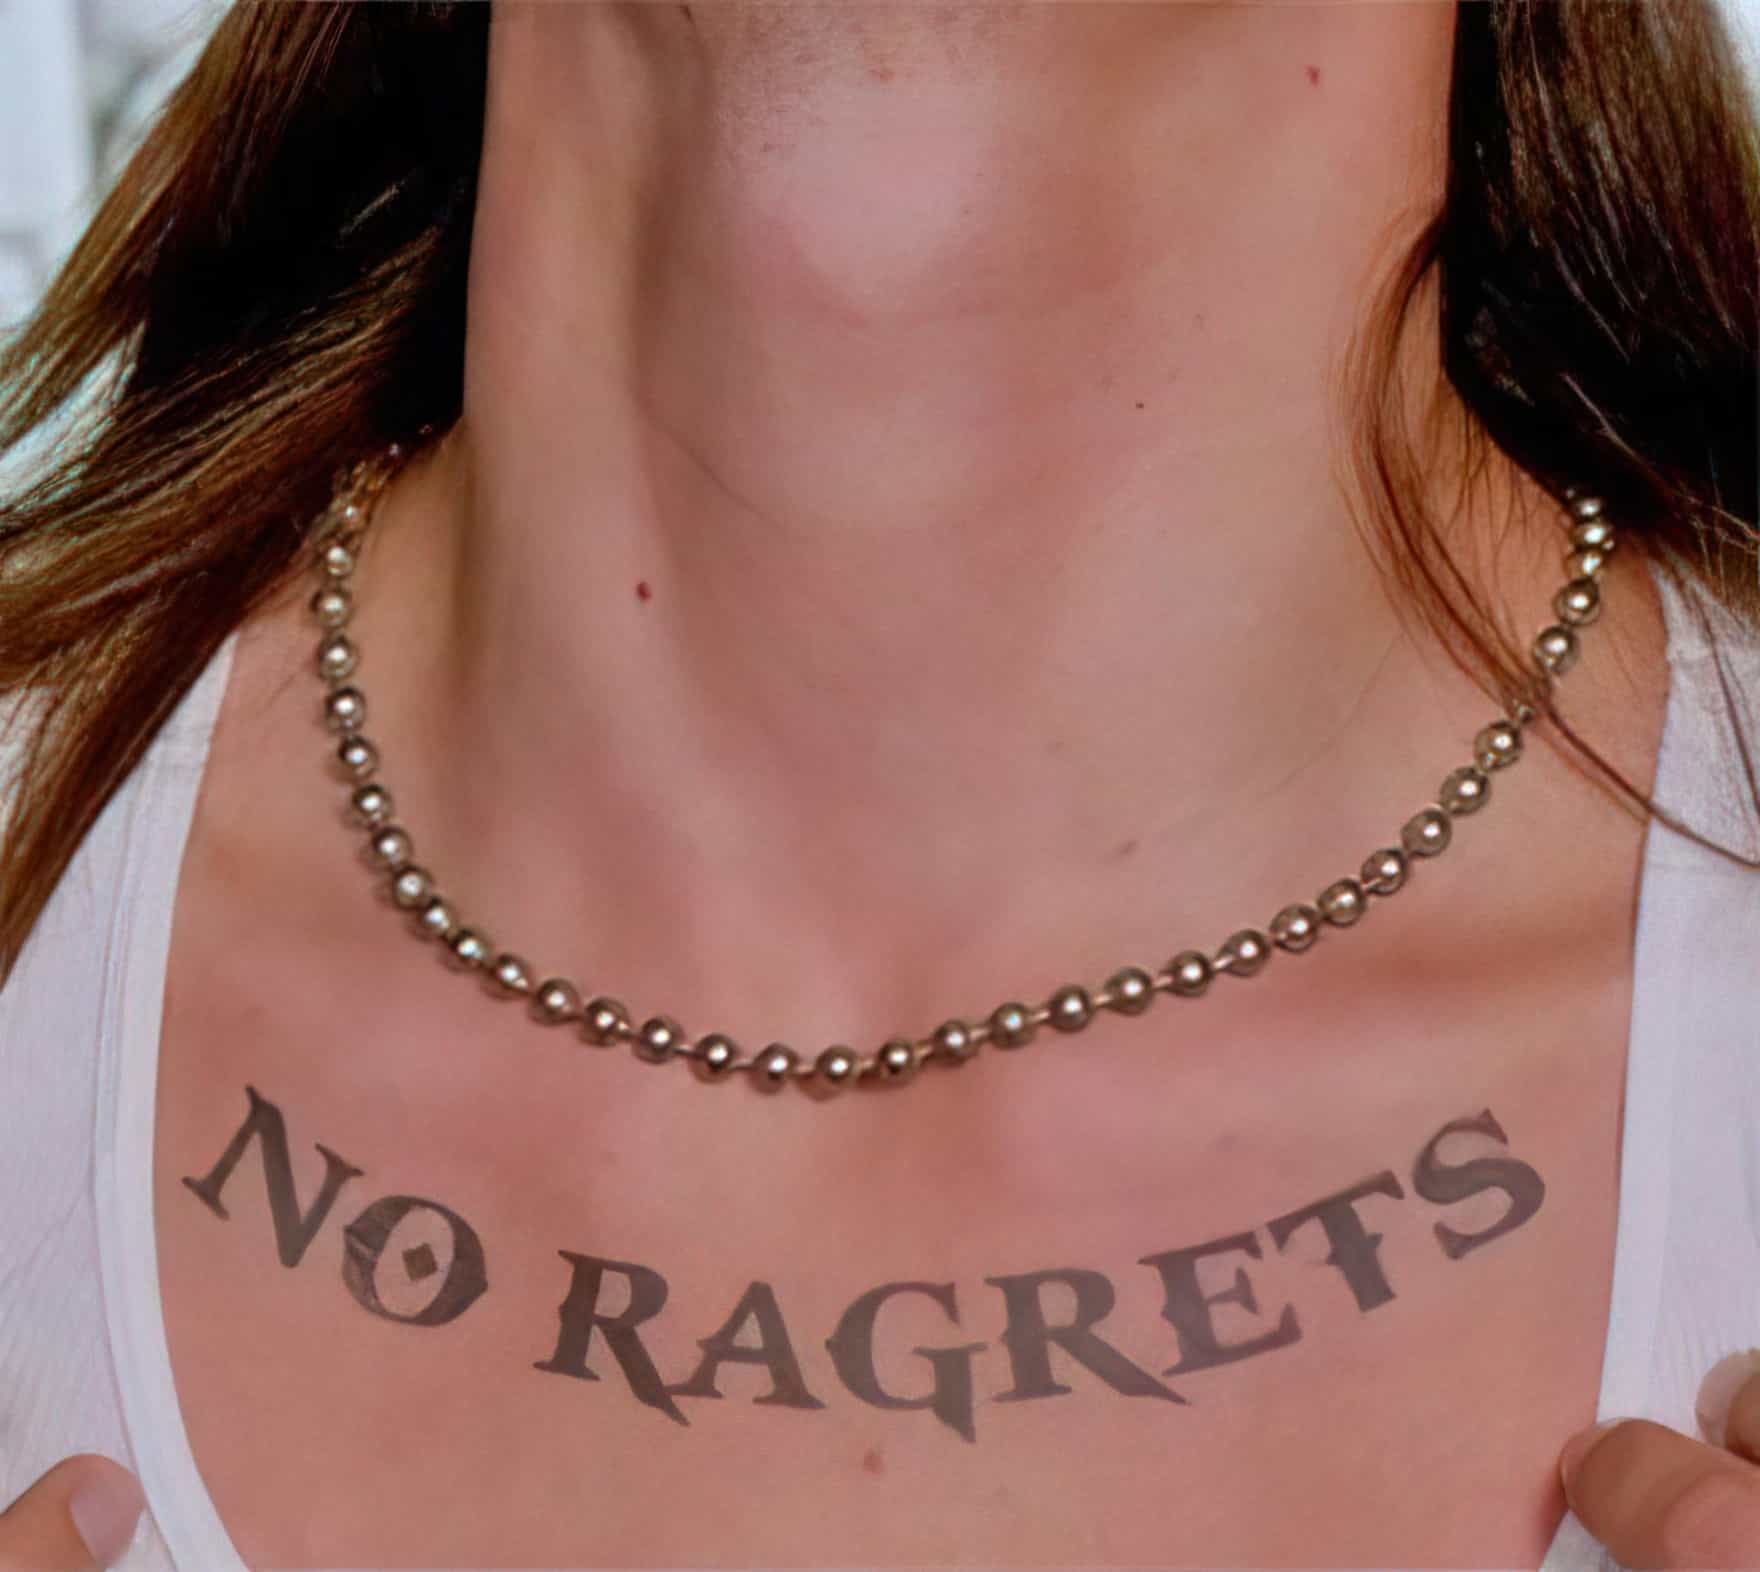 no ragrets tattoo up close